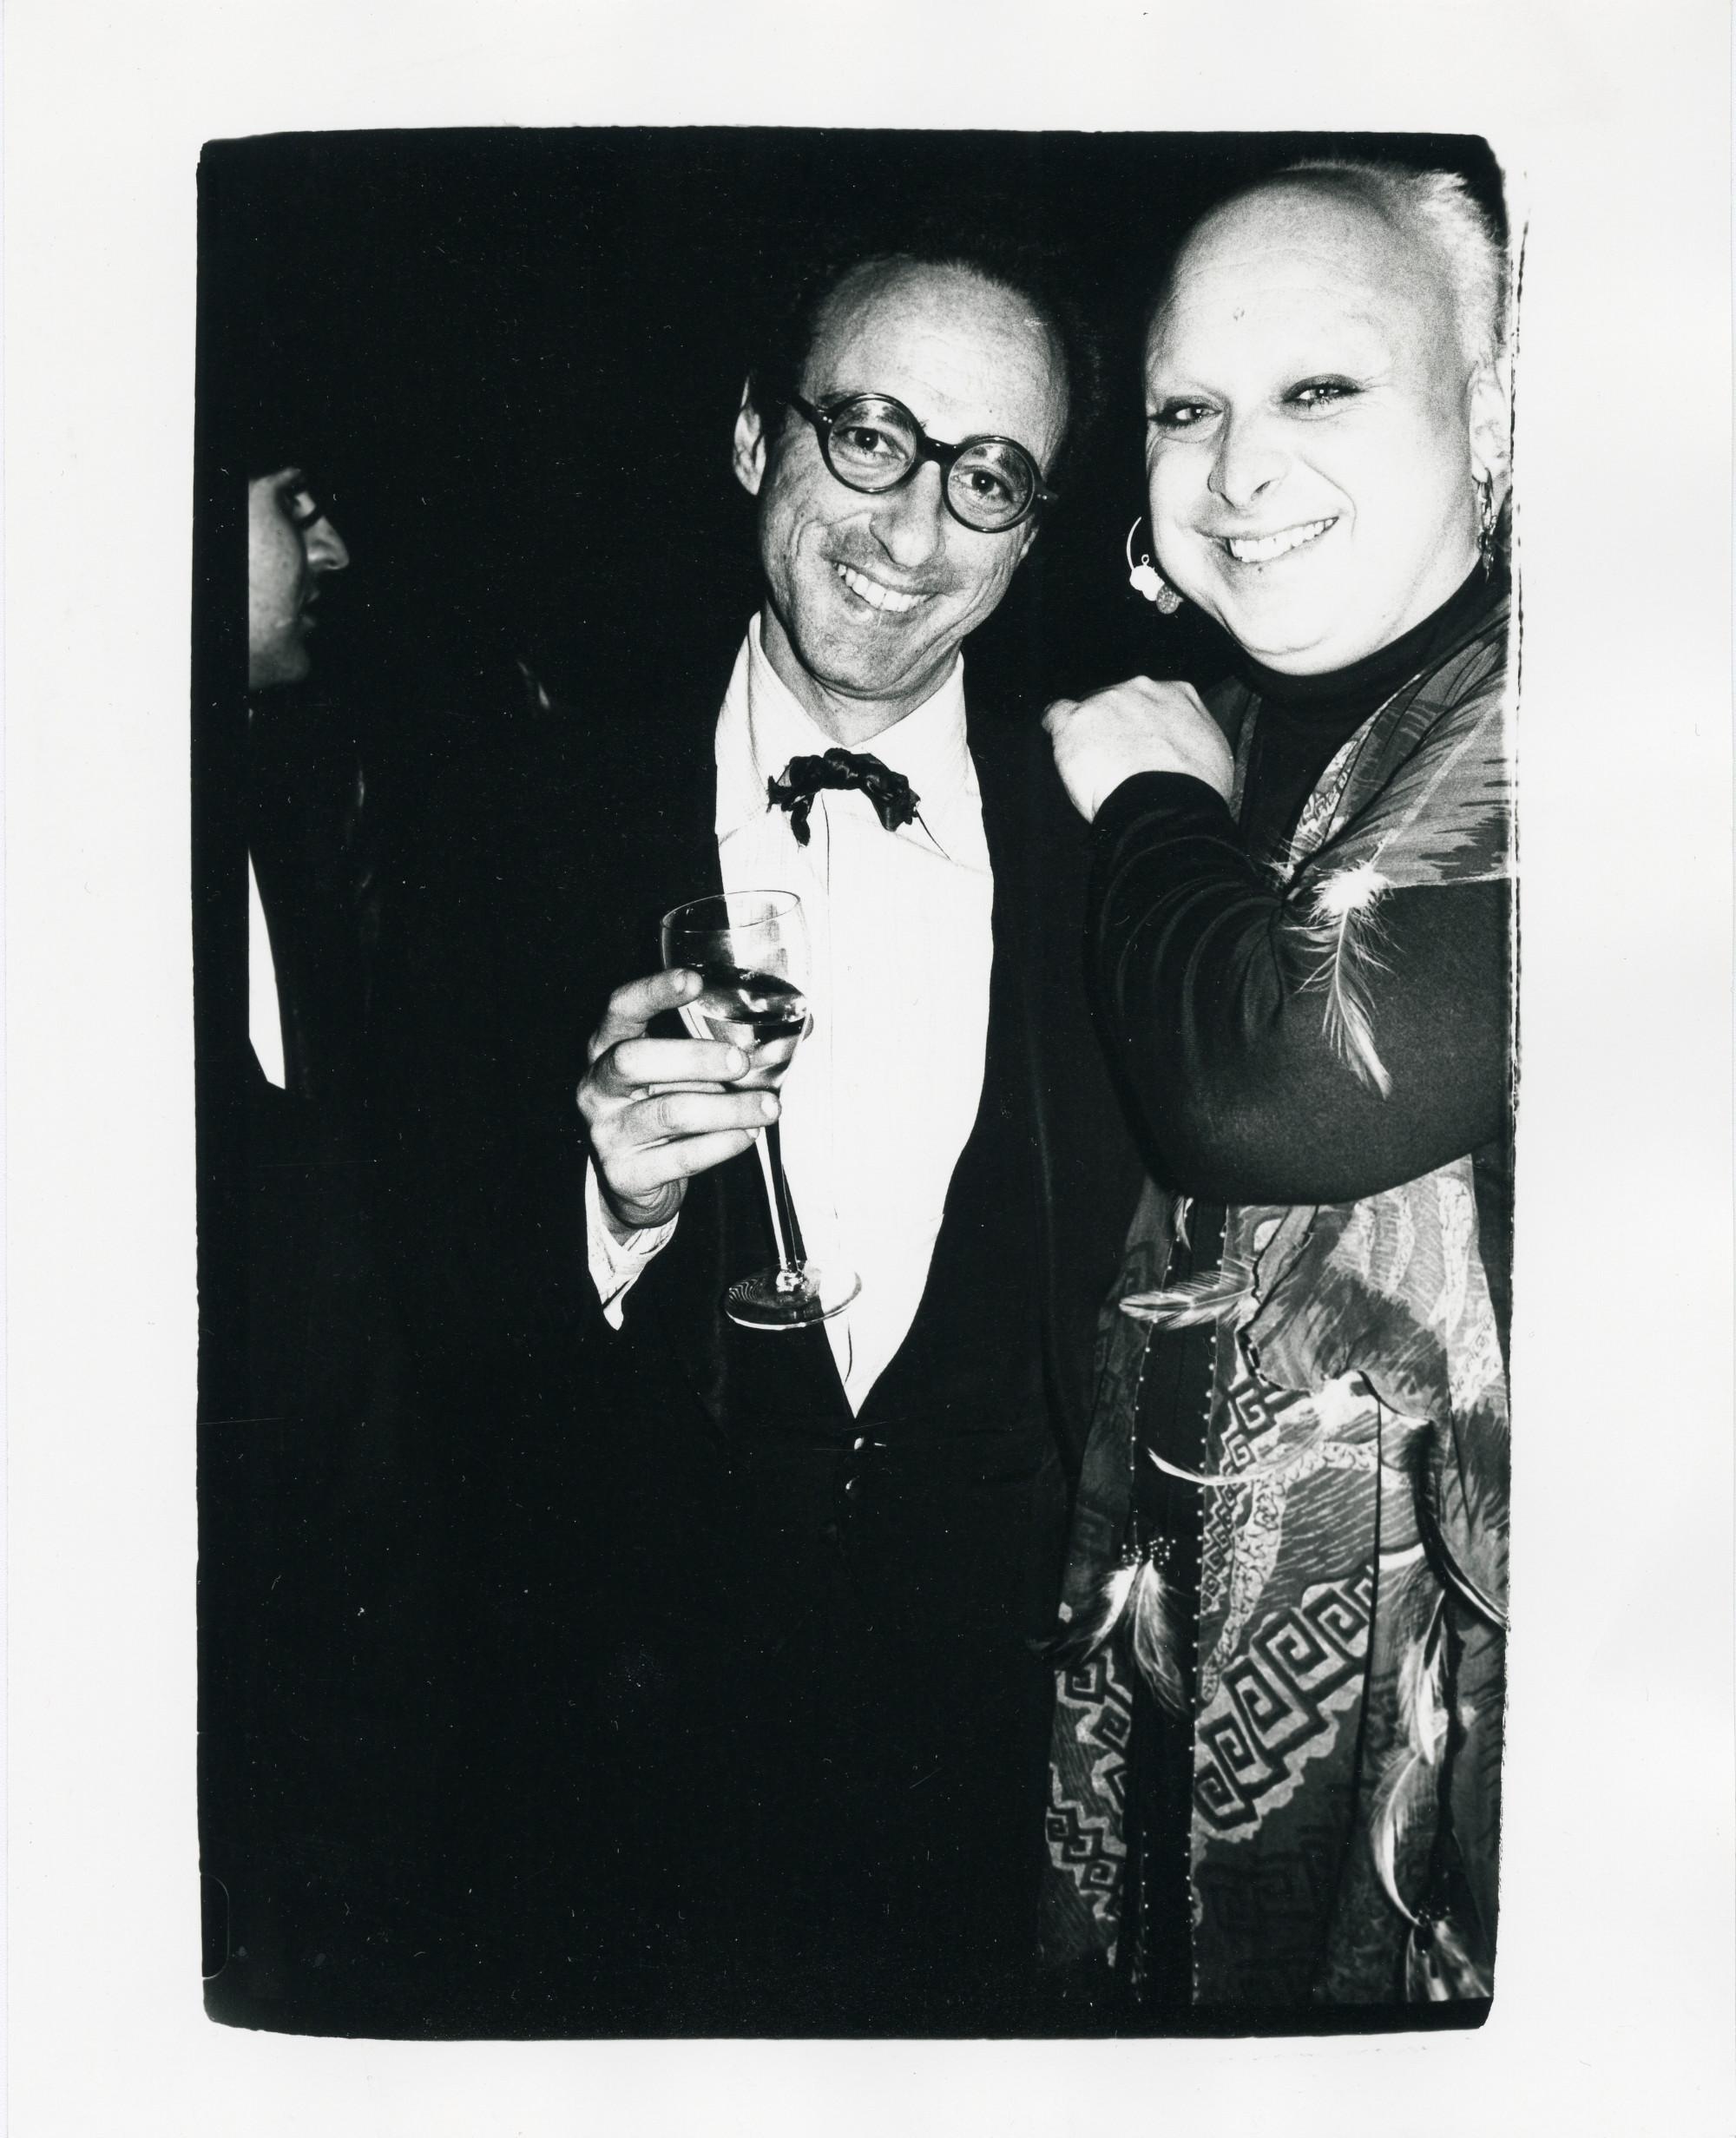 Andy Warhol Portrait Photograph - Divine and Stephen Aronson